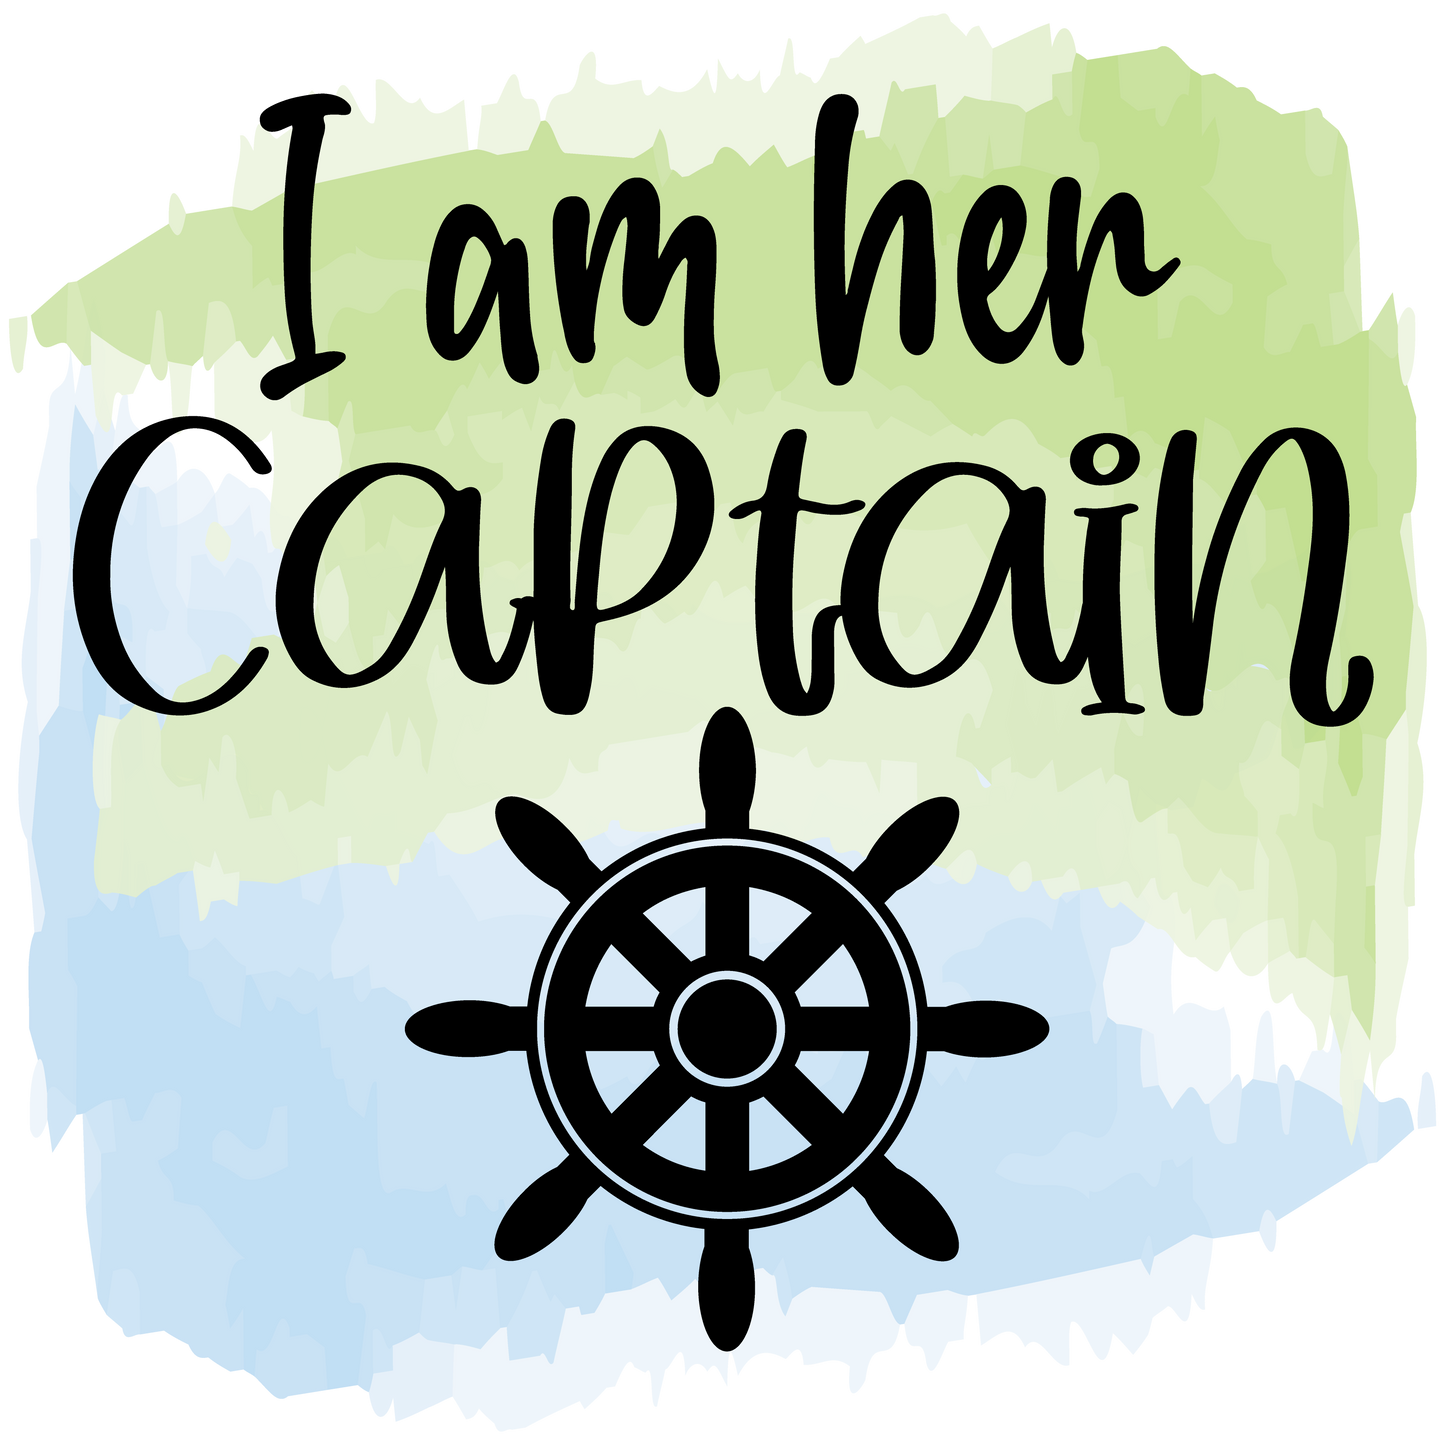 I am her Captain